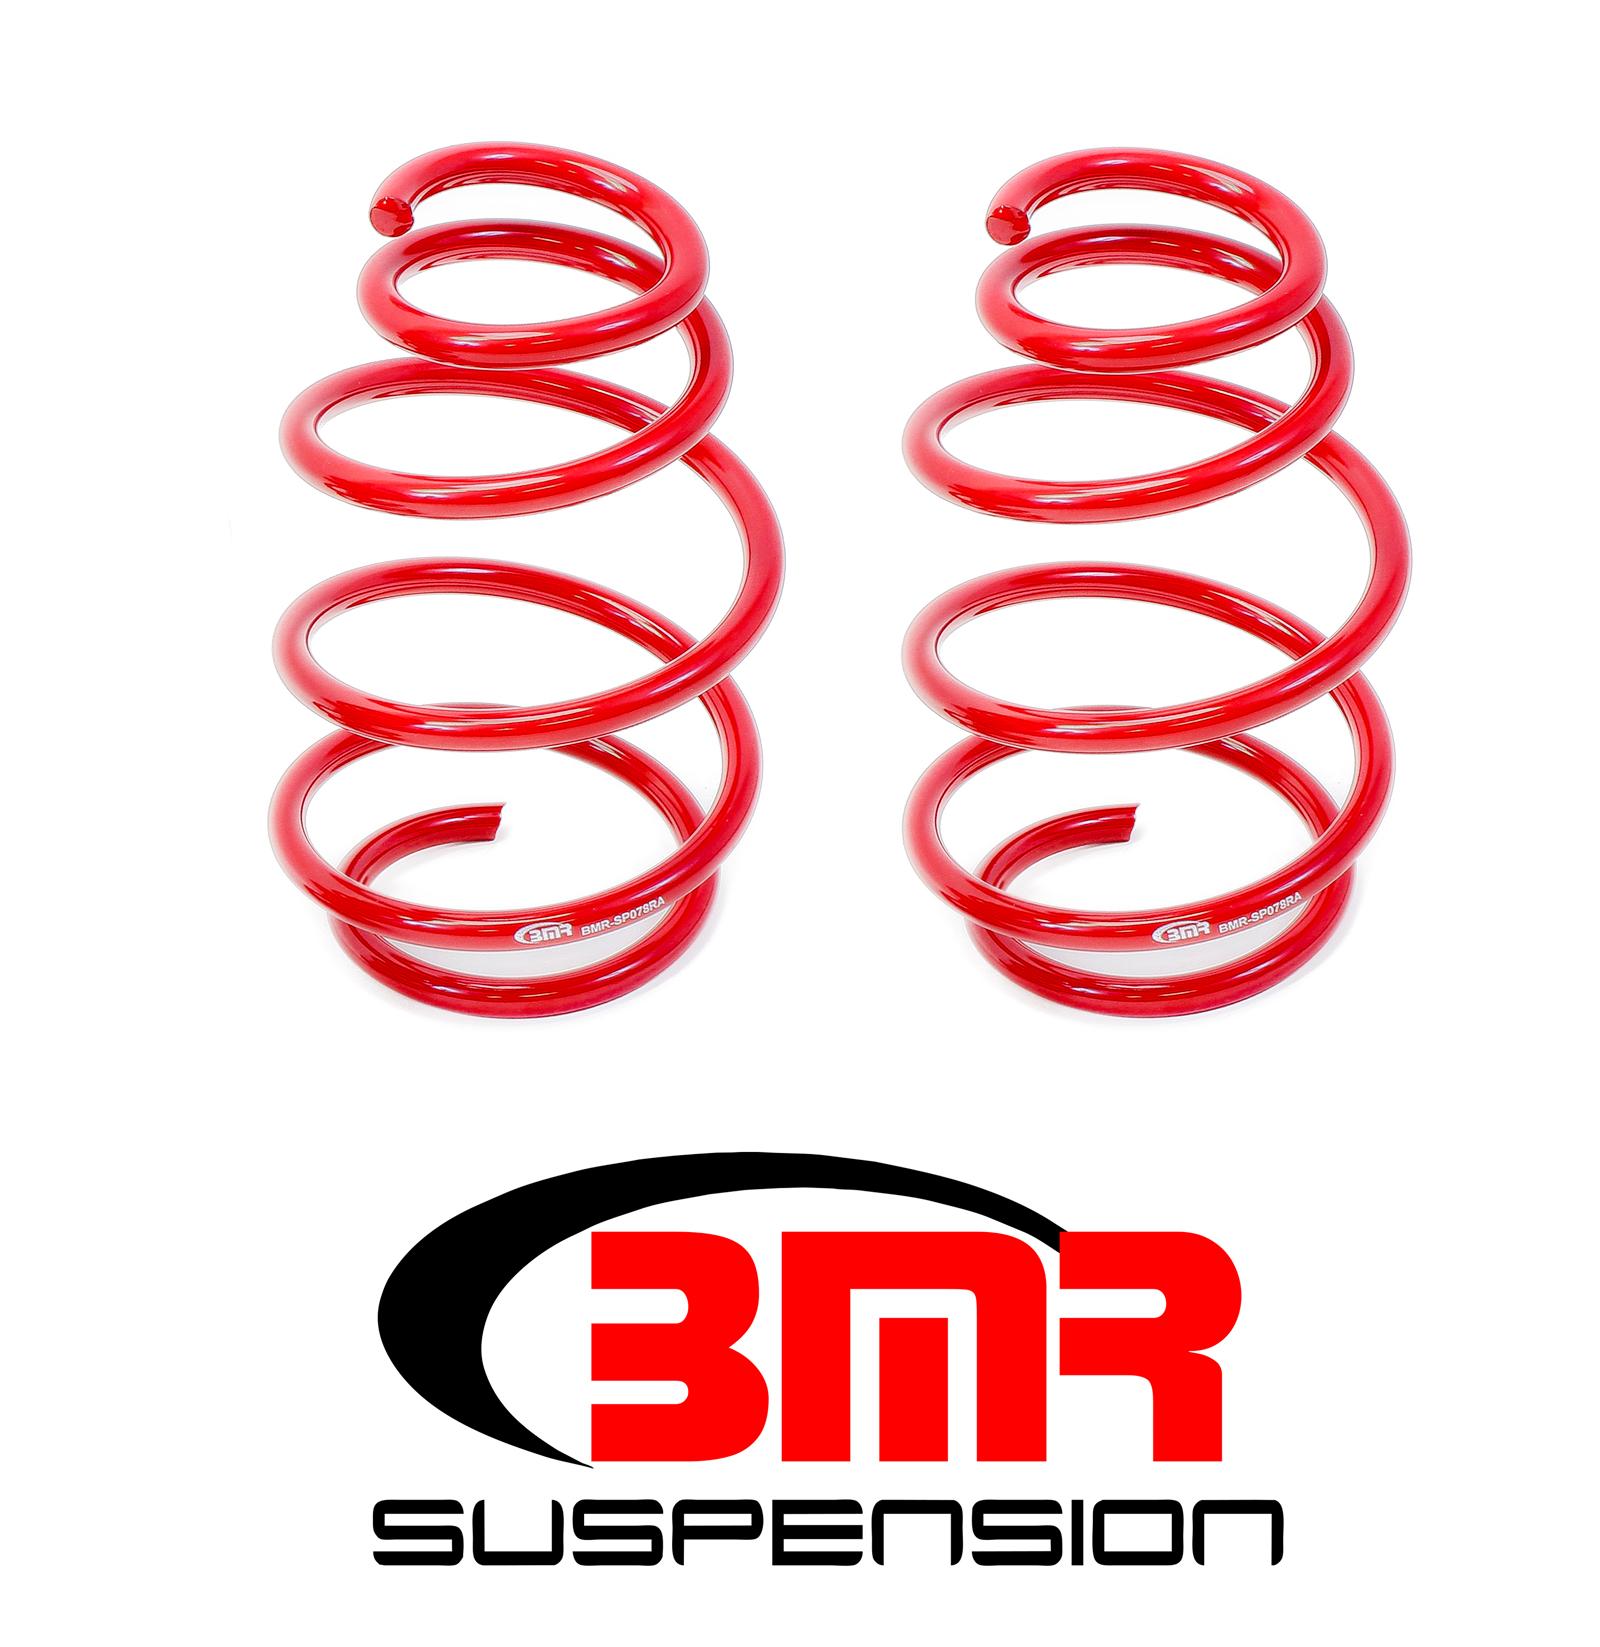 2010+ Camaro SS BMR Suspension Front Lowering Spring - 1.25" Drop (220lb/in Spring Rate)